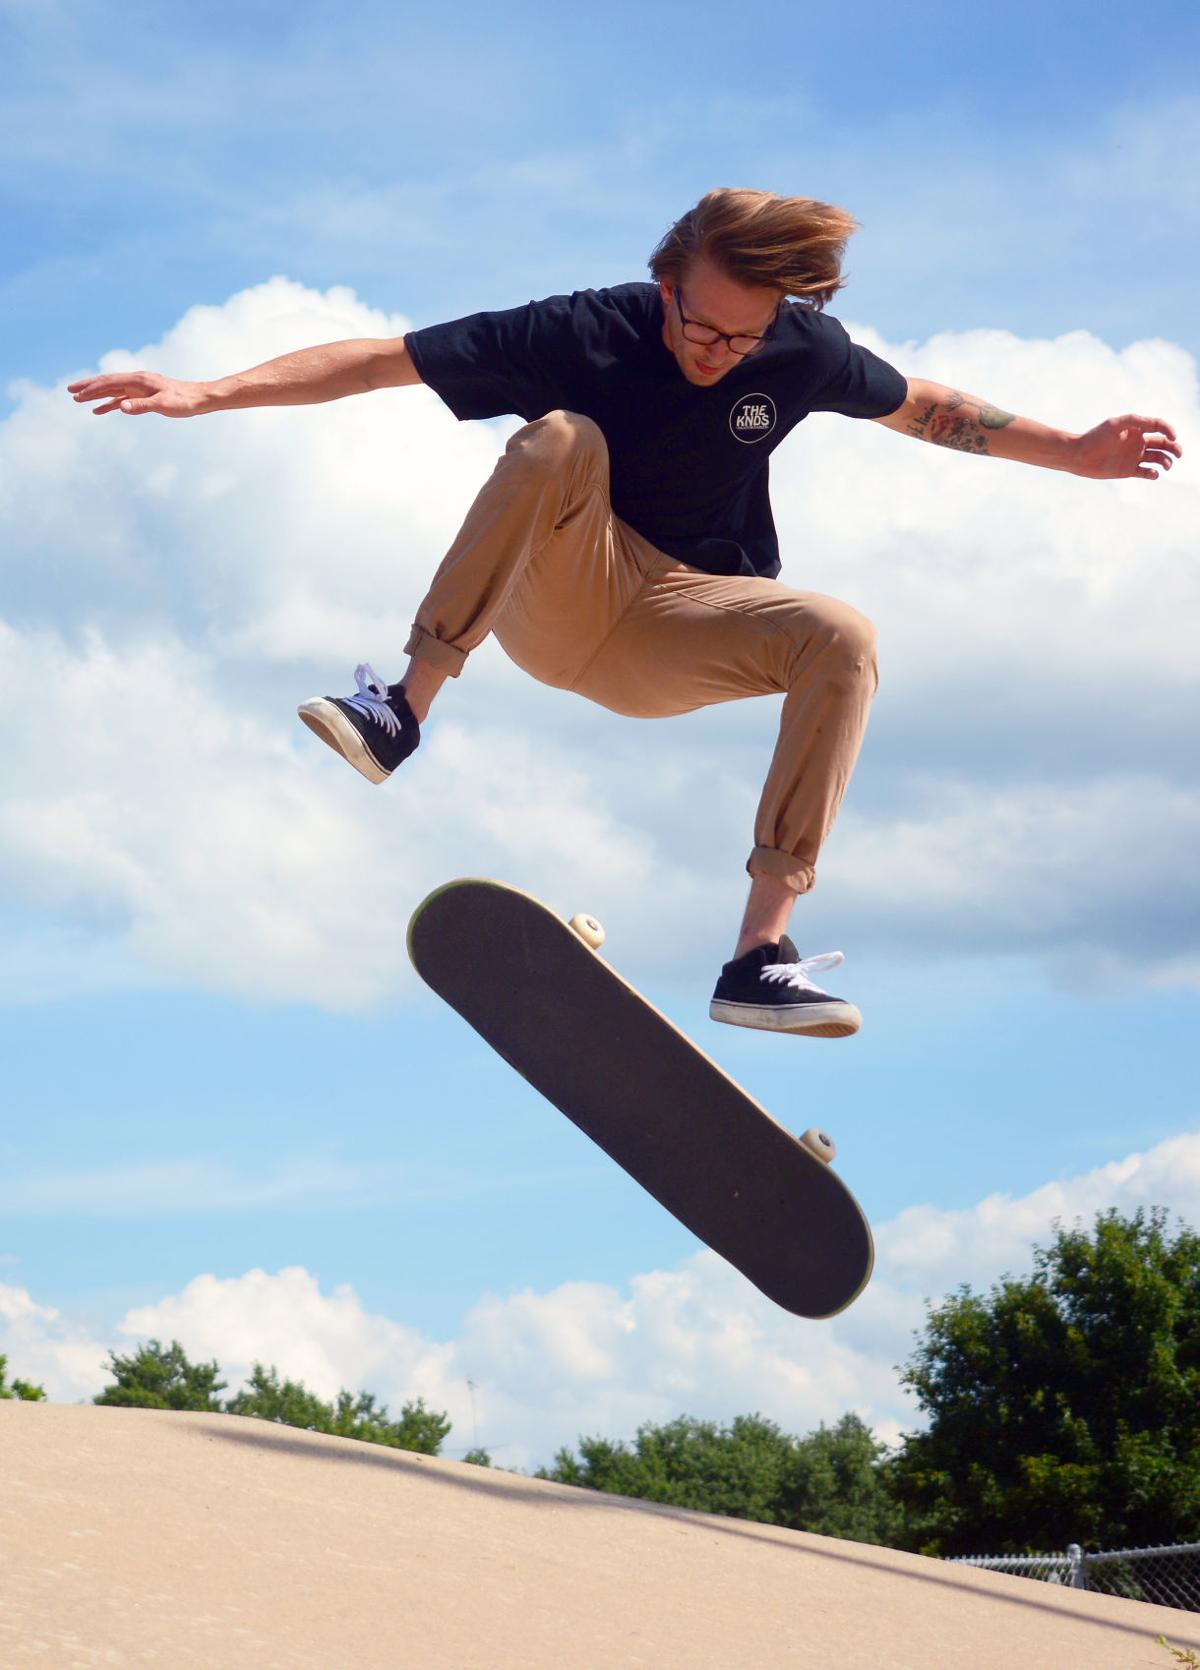 trent maxwel skateboarding